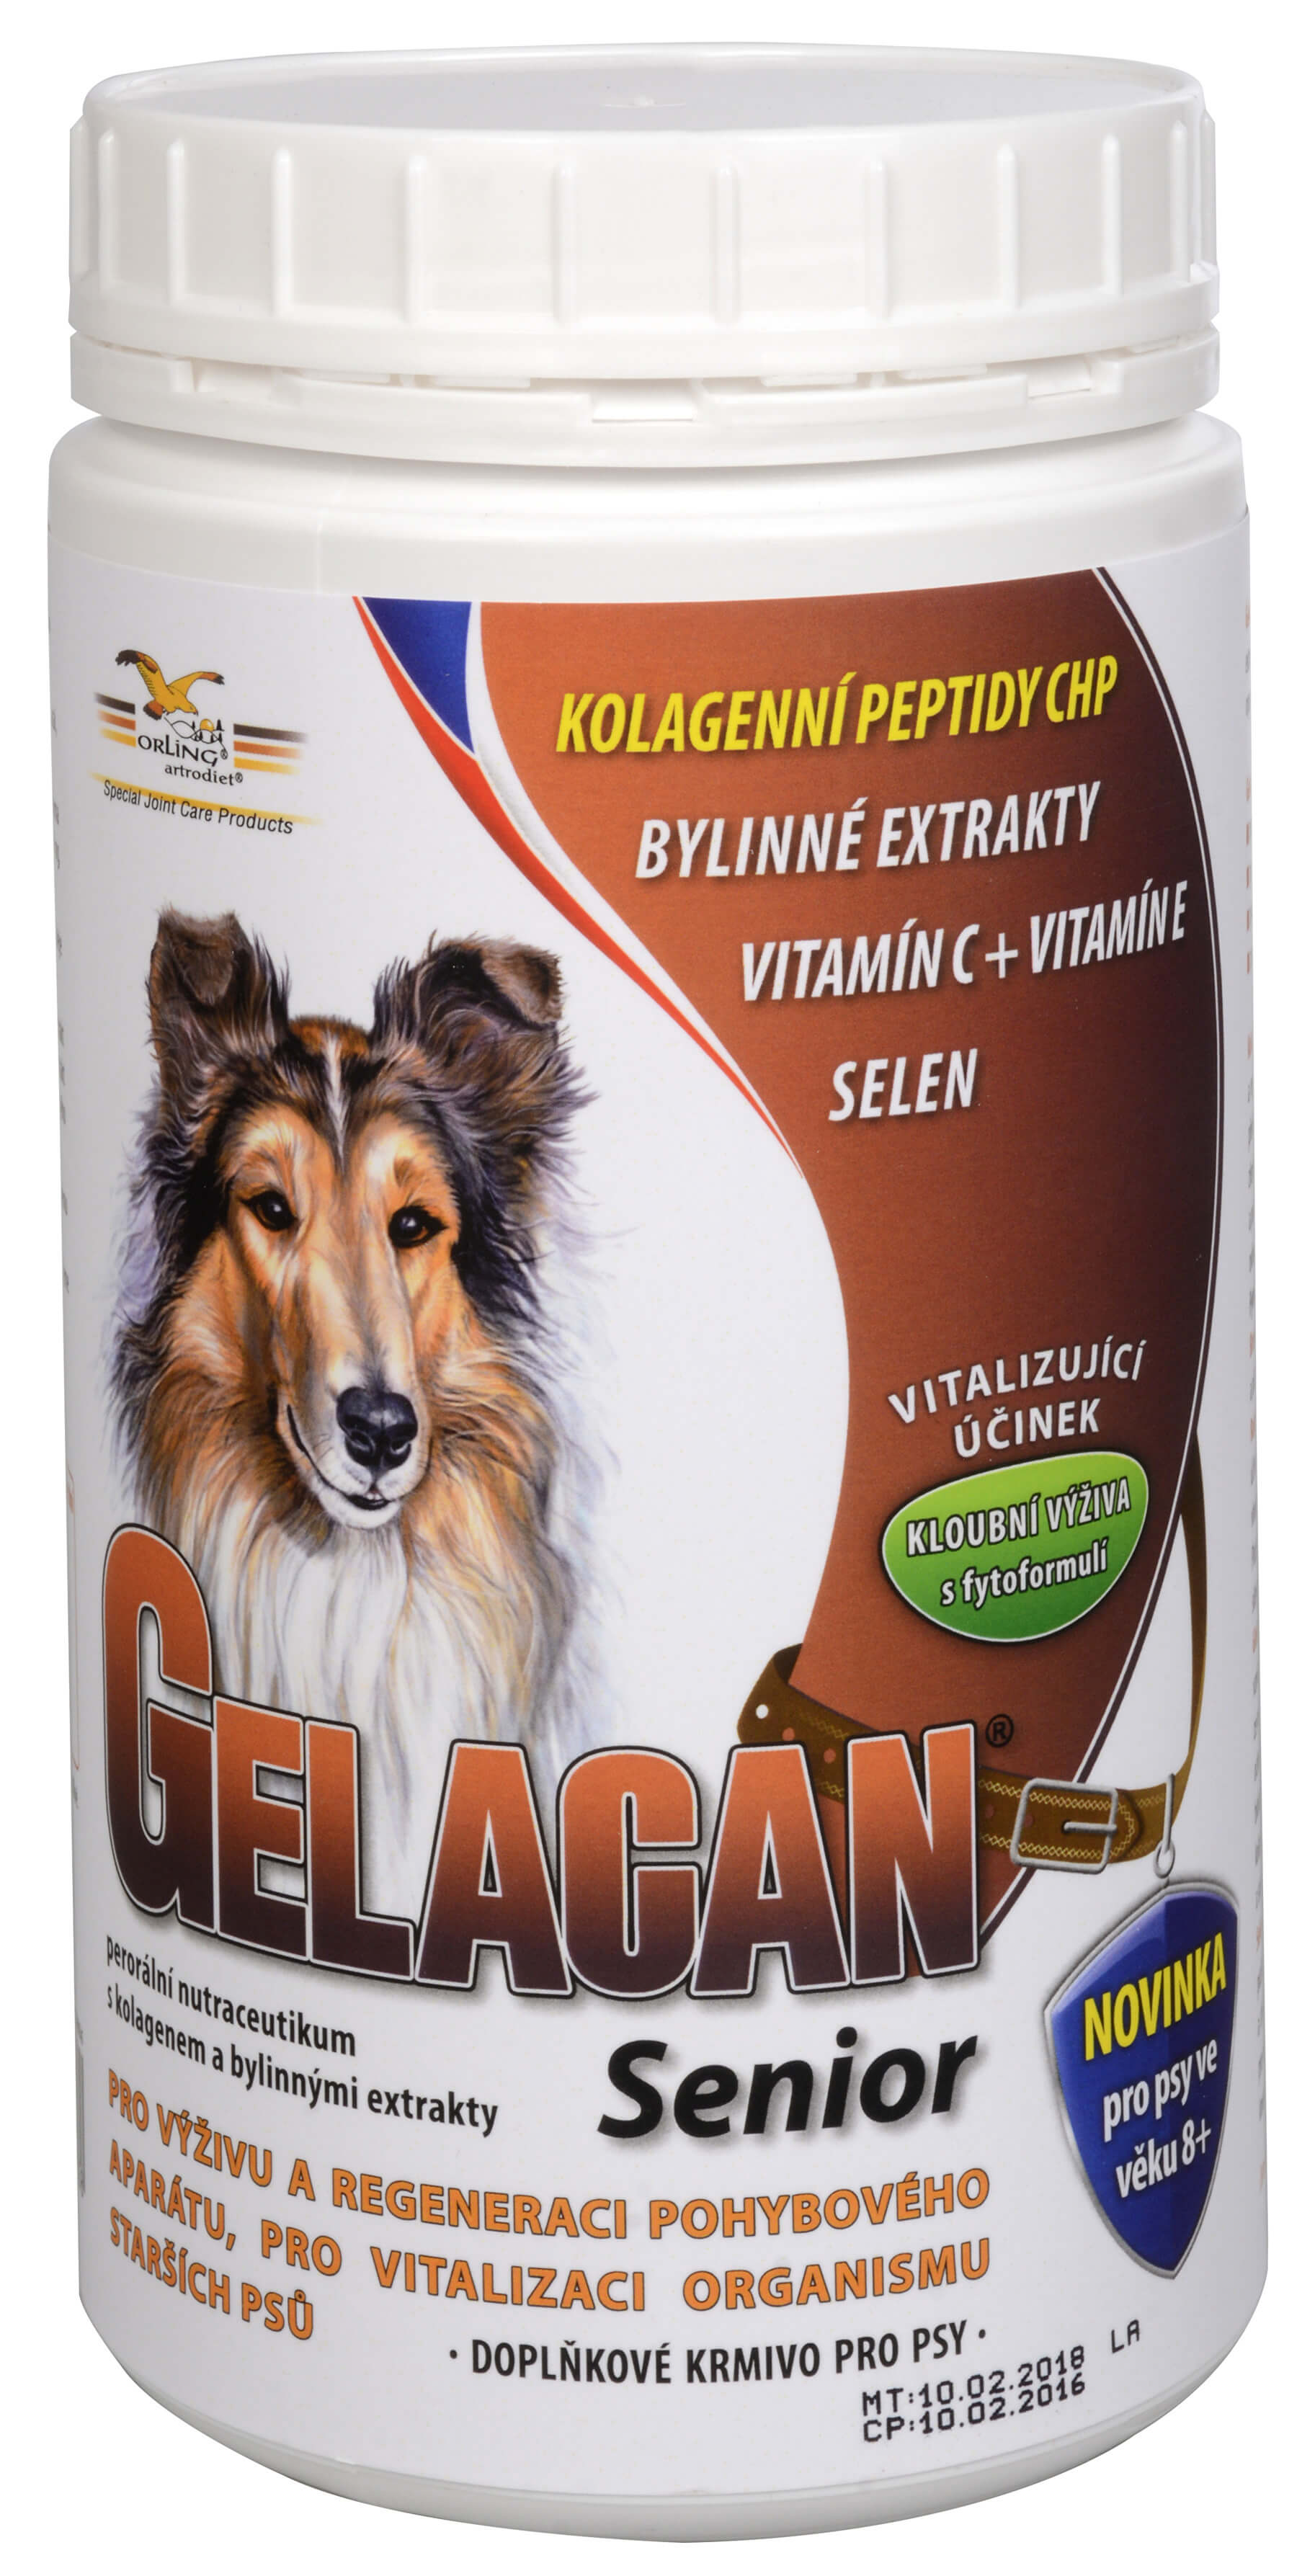 GELACAN Gelacan Senior 500 g